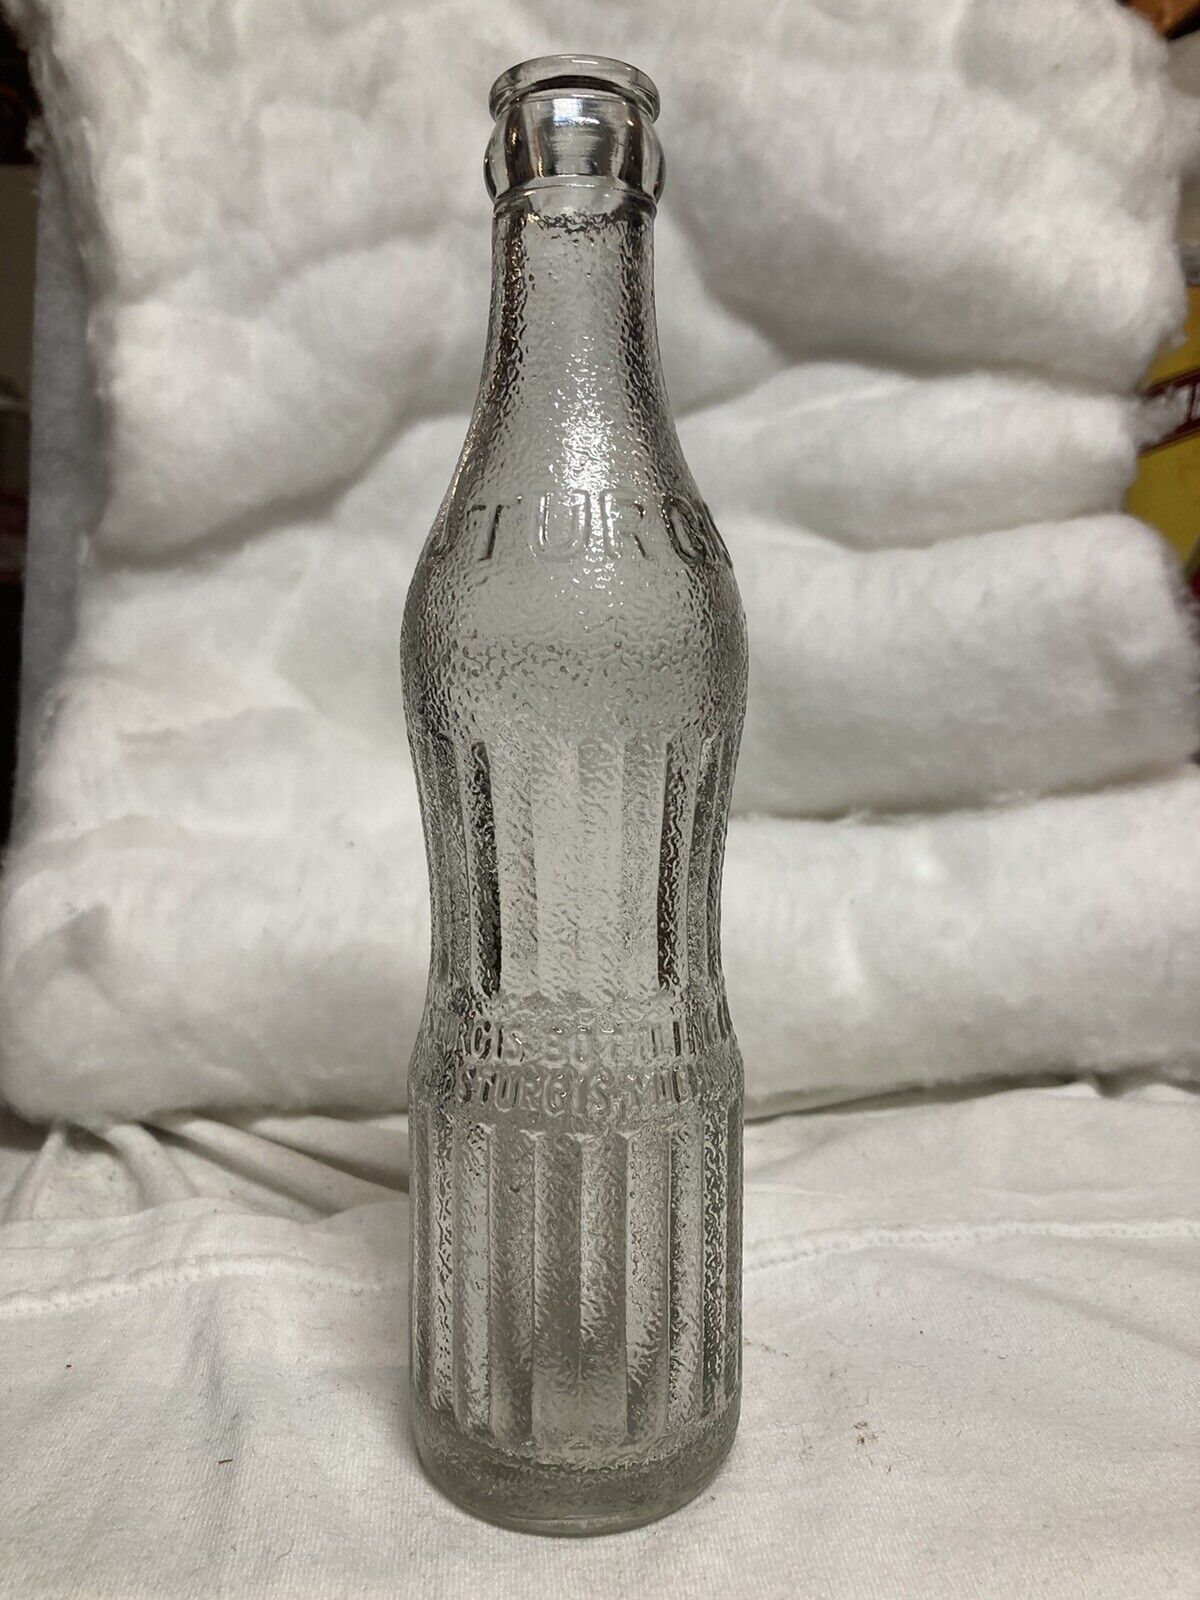 Sturgis Bottling Co. Sturgis, Michigan, 1954 Embossed 7 oz Soda Bottle